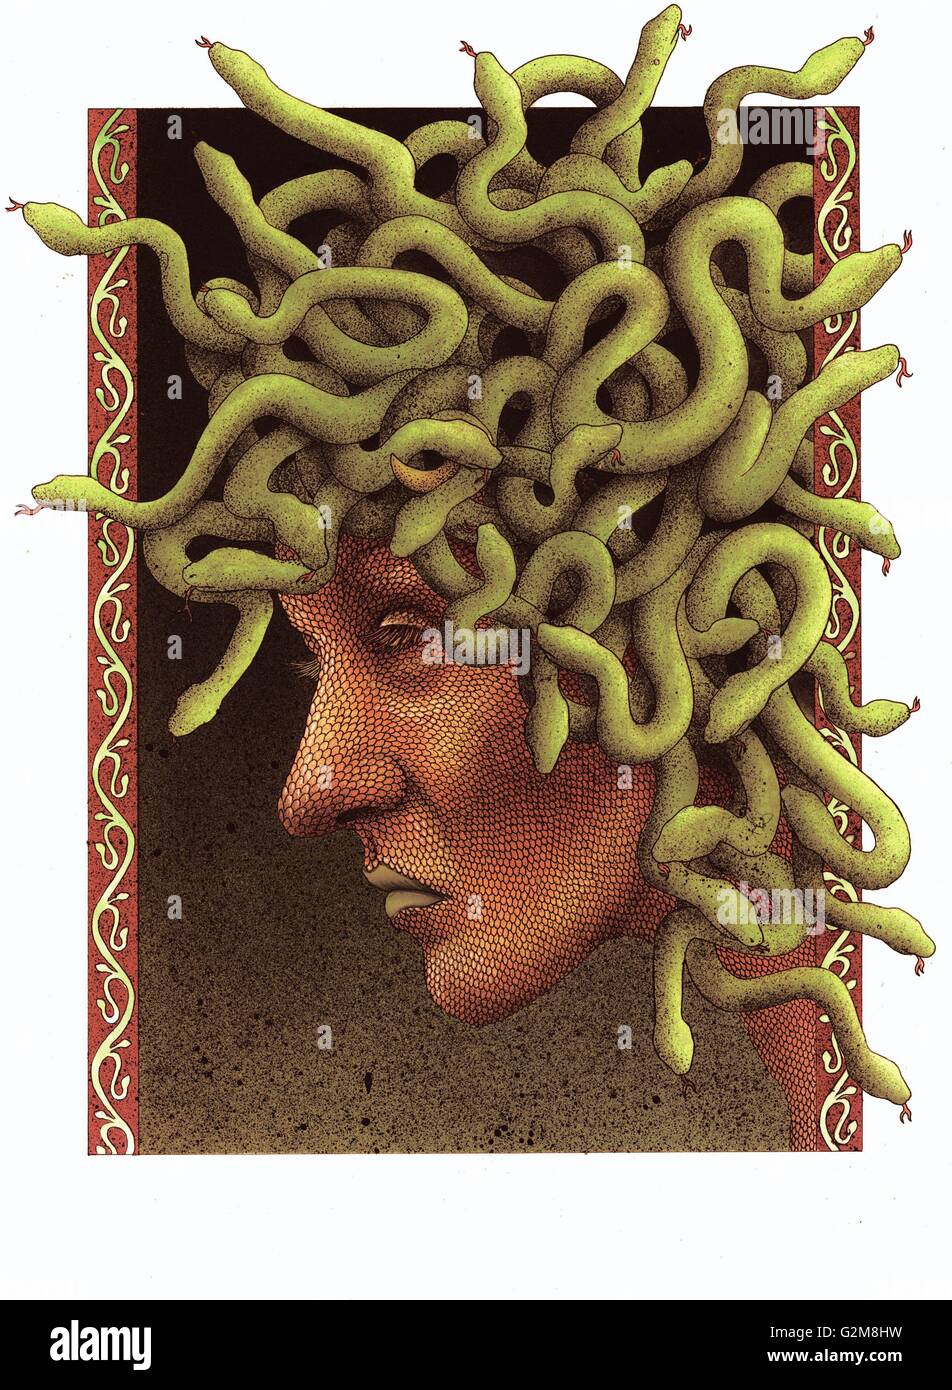 https://c8.alamy.com/comp/G2M8HW/fantasy-image-of-head-with-snake-hair-G2M8HW.jpg